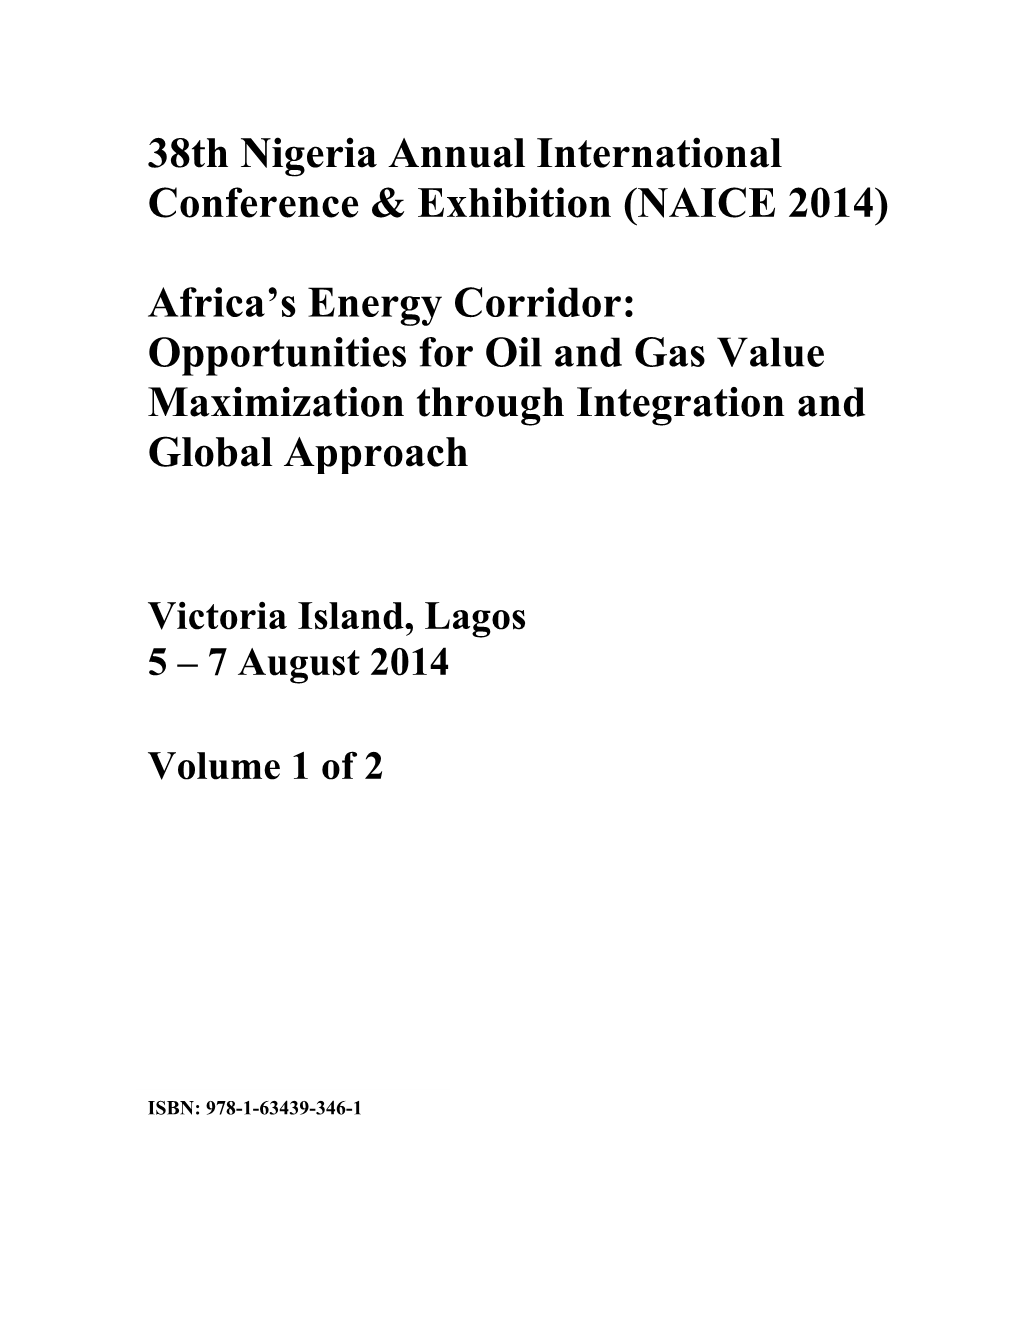 (NAICE 2014) Africa's Energy Corridor: Opportunities for Oil